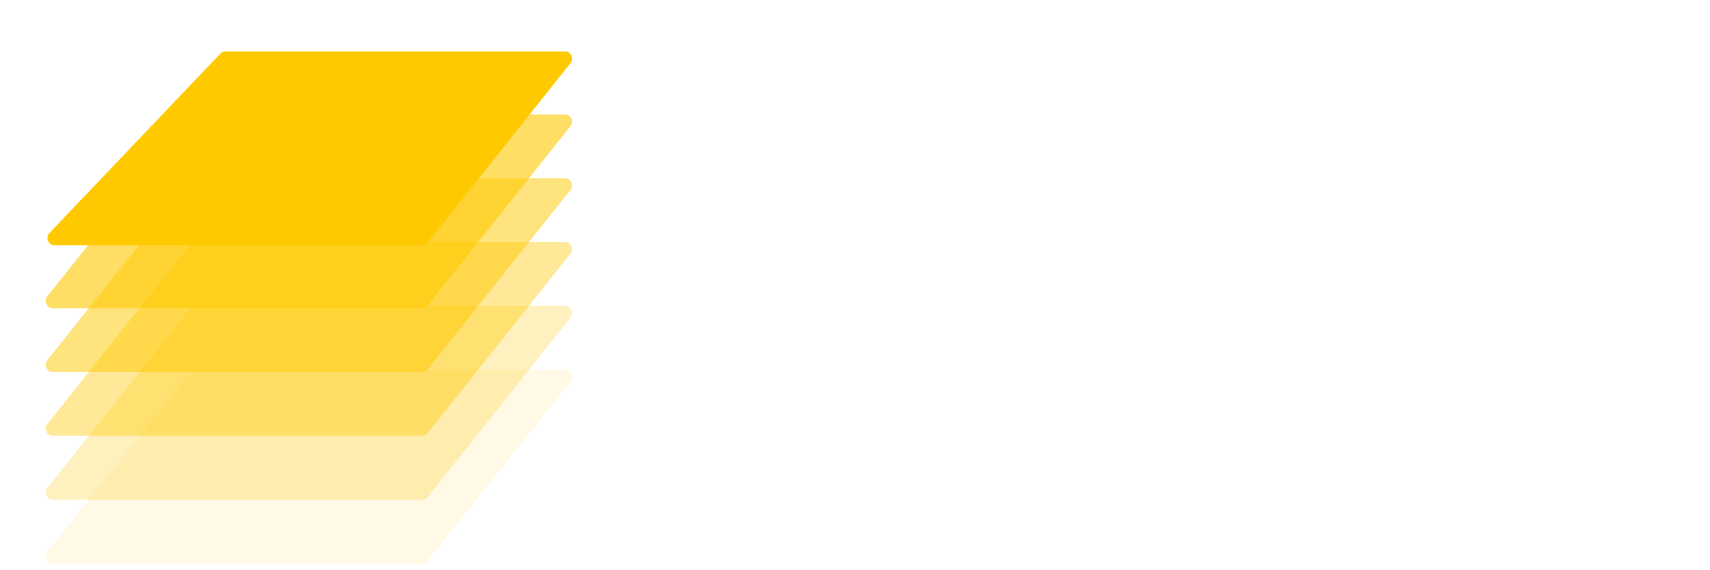 beneluxe-ceramica-logo-wit